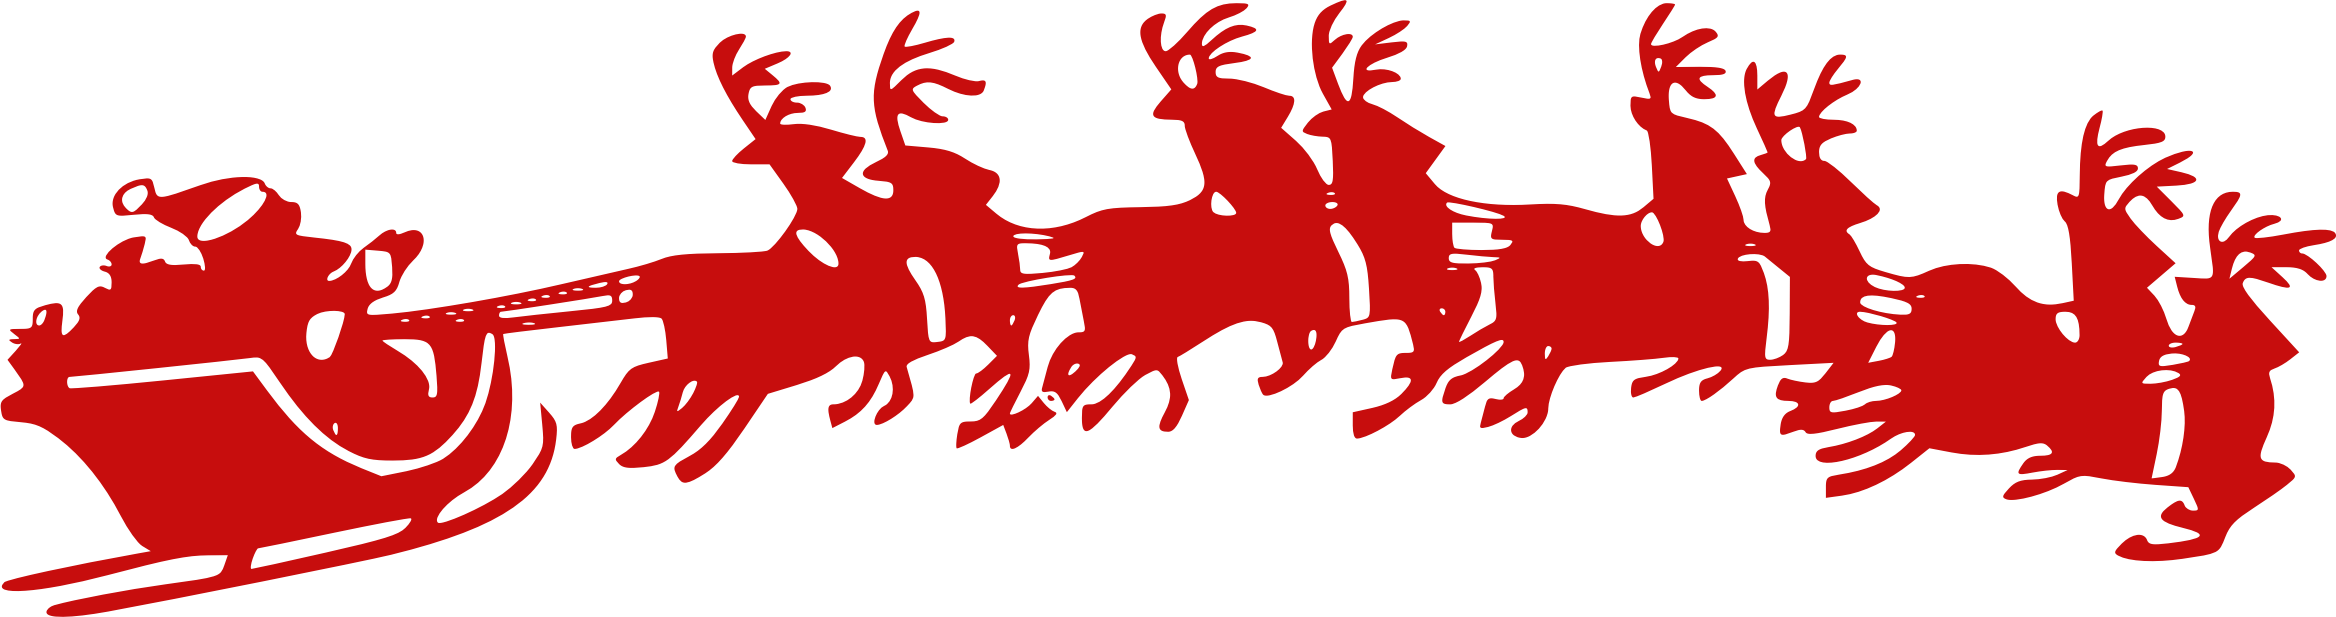 santa sleigh pulled reindeer vector clipart image photo domain photo #30502